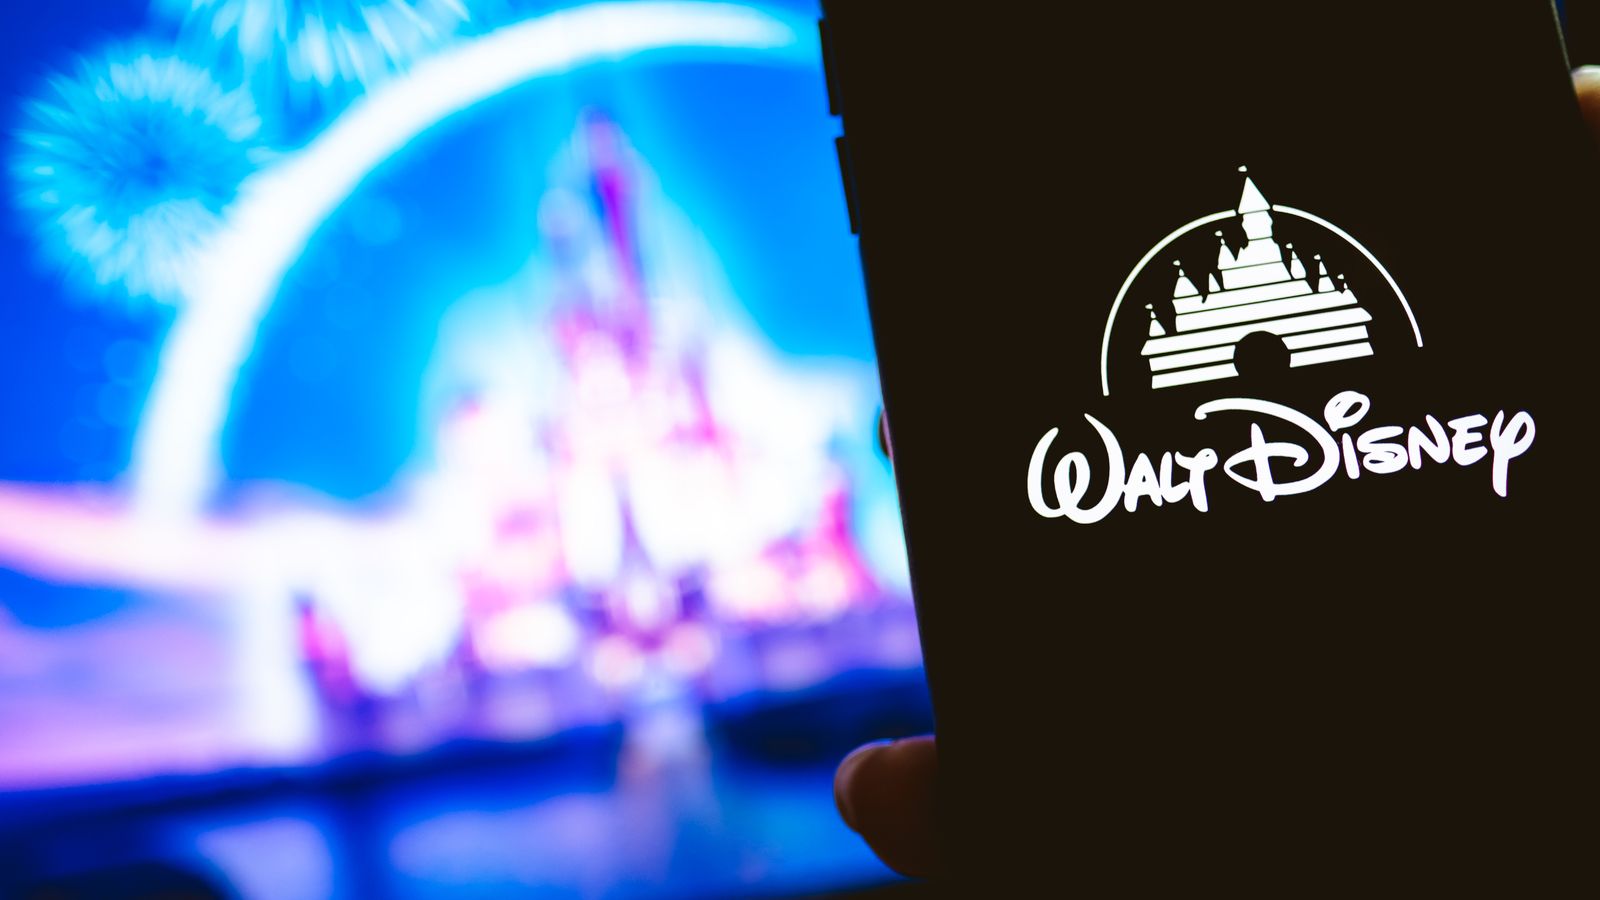 Walt Disney logo on mobile phone with Cinderella's castile in background